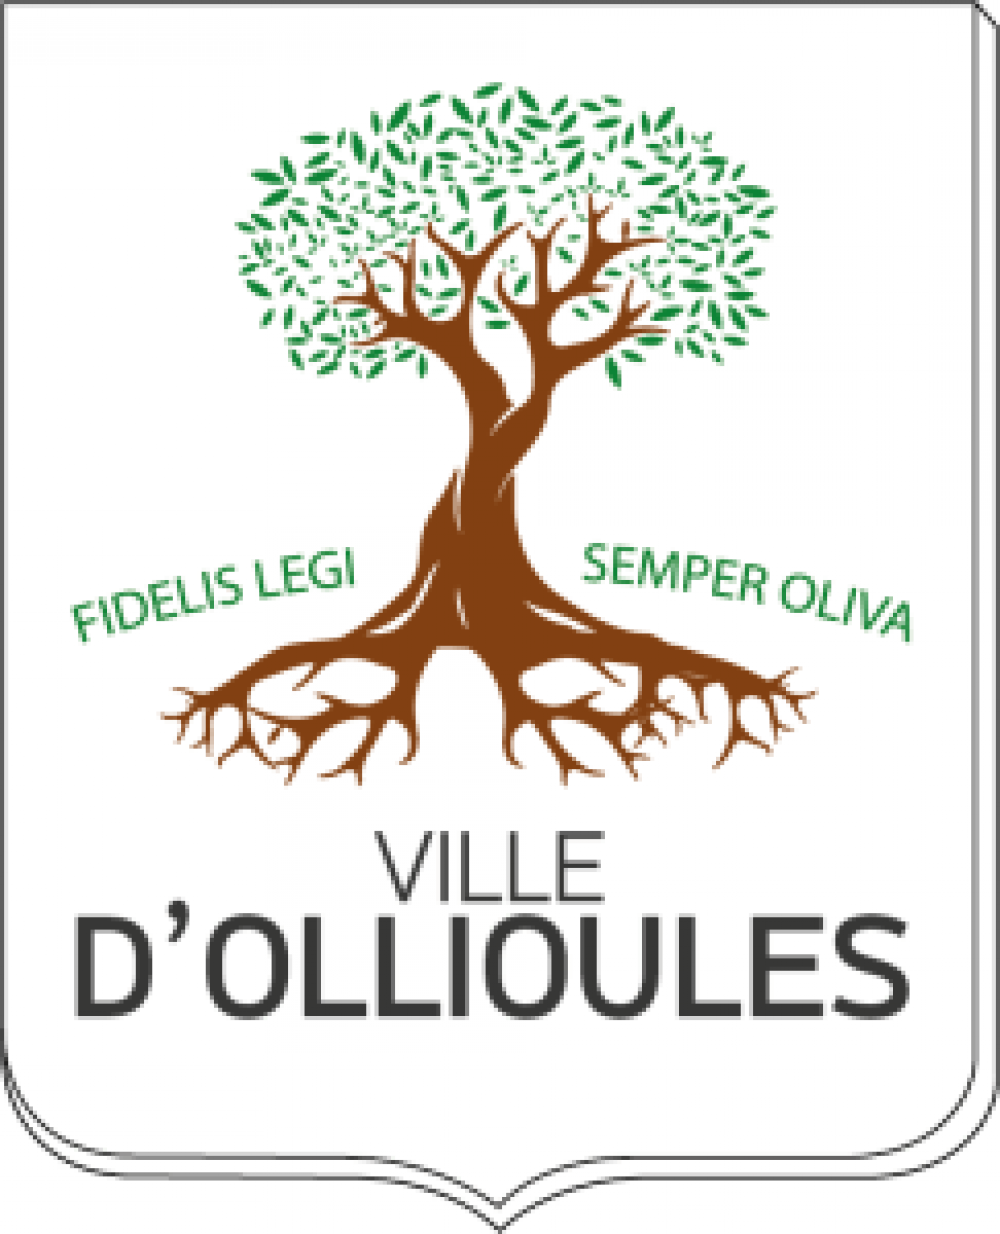 Logo Ollioules